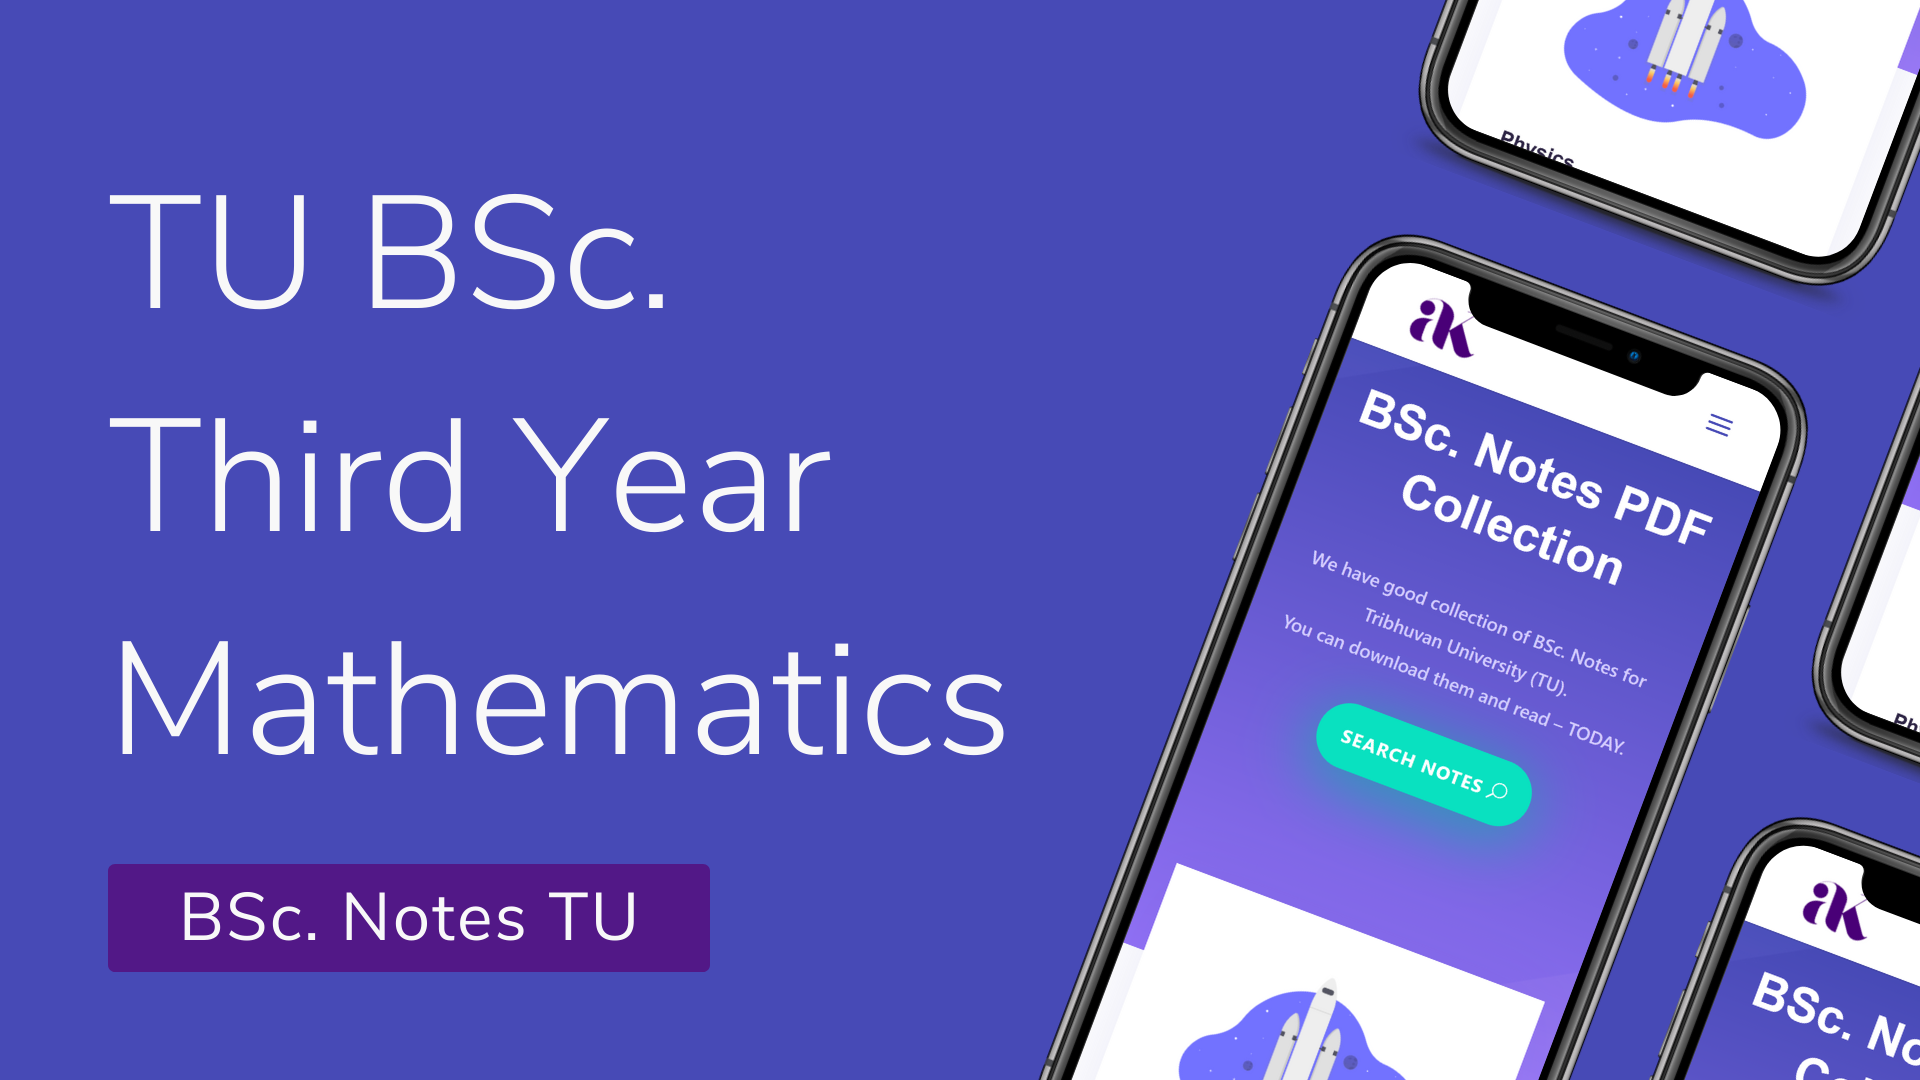 TU BSc. Third Year Math Notes PDF - Avash Kattel